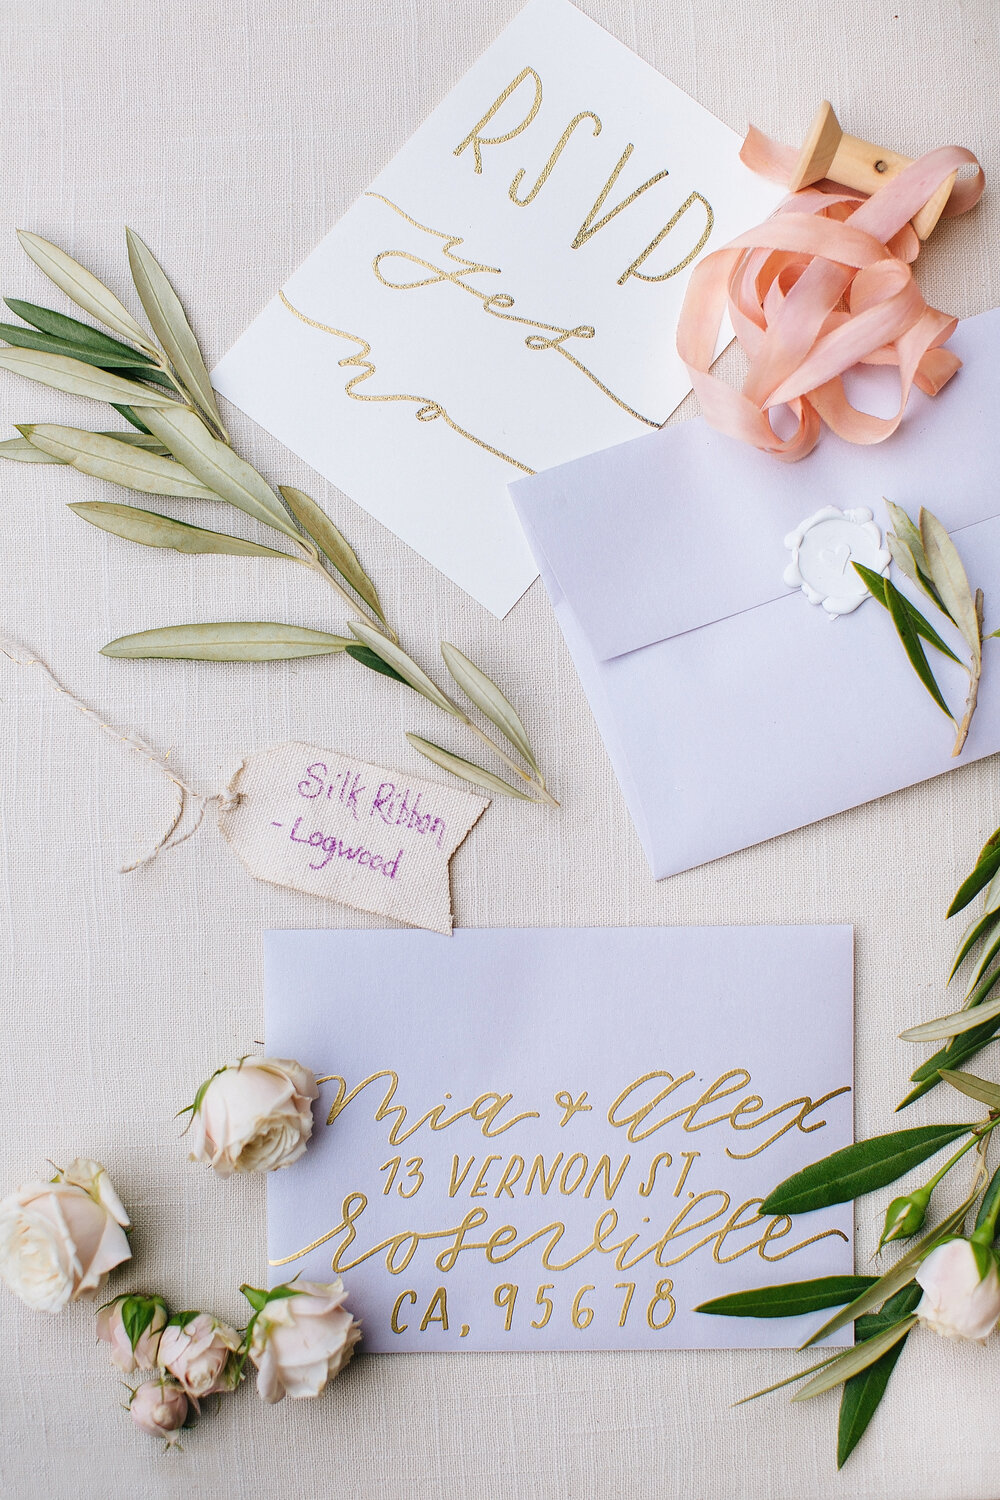 calligraphy-ashbaumgartner-v-sattui-sonoma-california-wedding-florist-elegant-design-hatbox-specialty-flowers-violette-fleurs-anna-perevertaylo.jpg